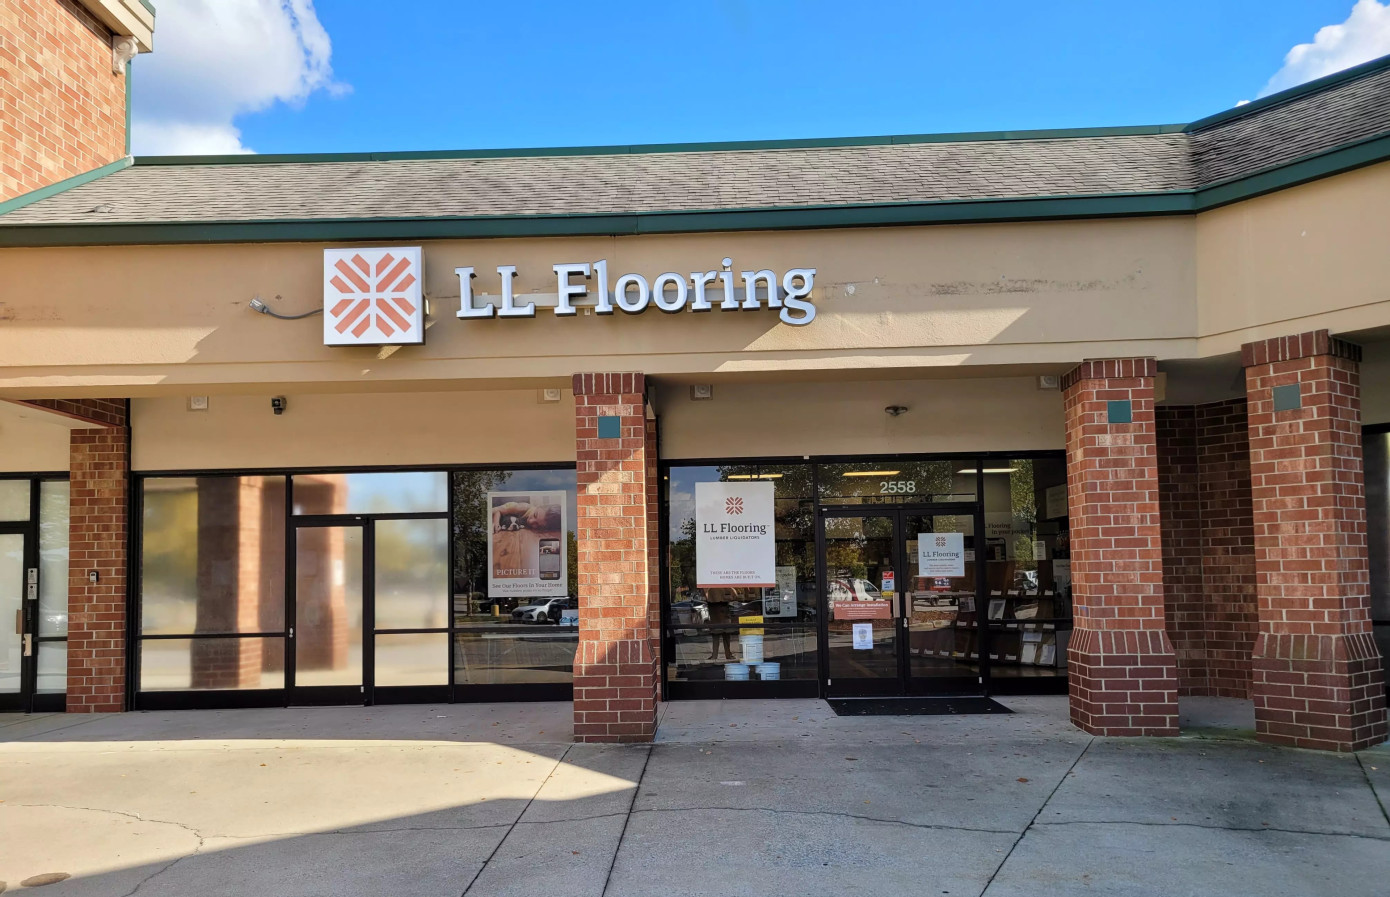 LL Flooring"s Q1 net sales decreased by 21.7%